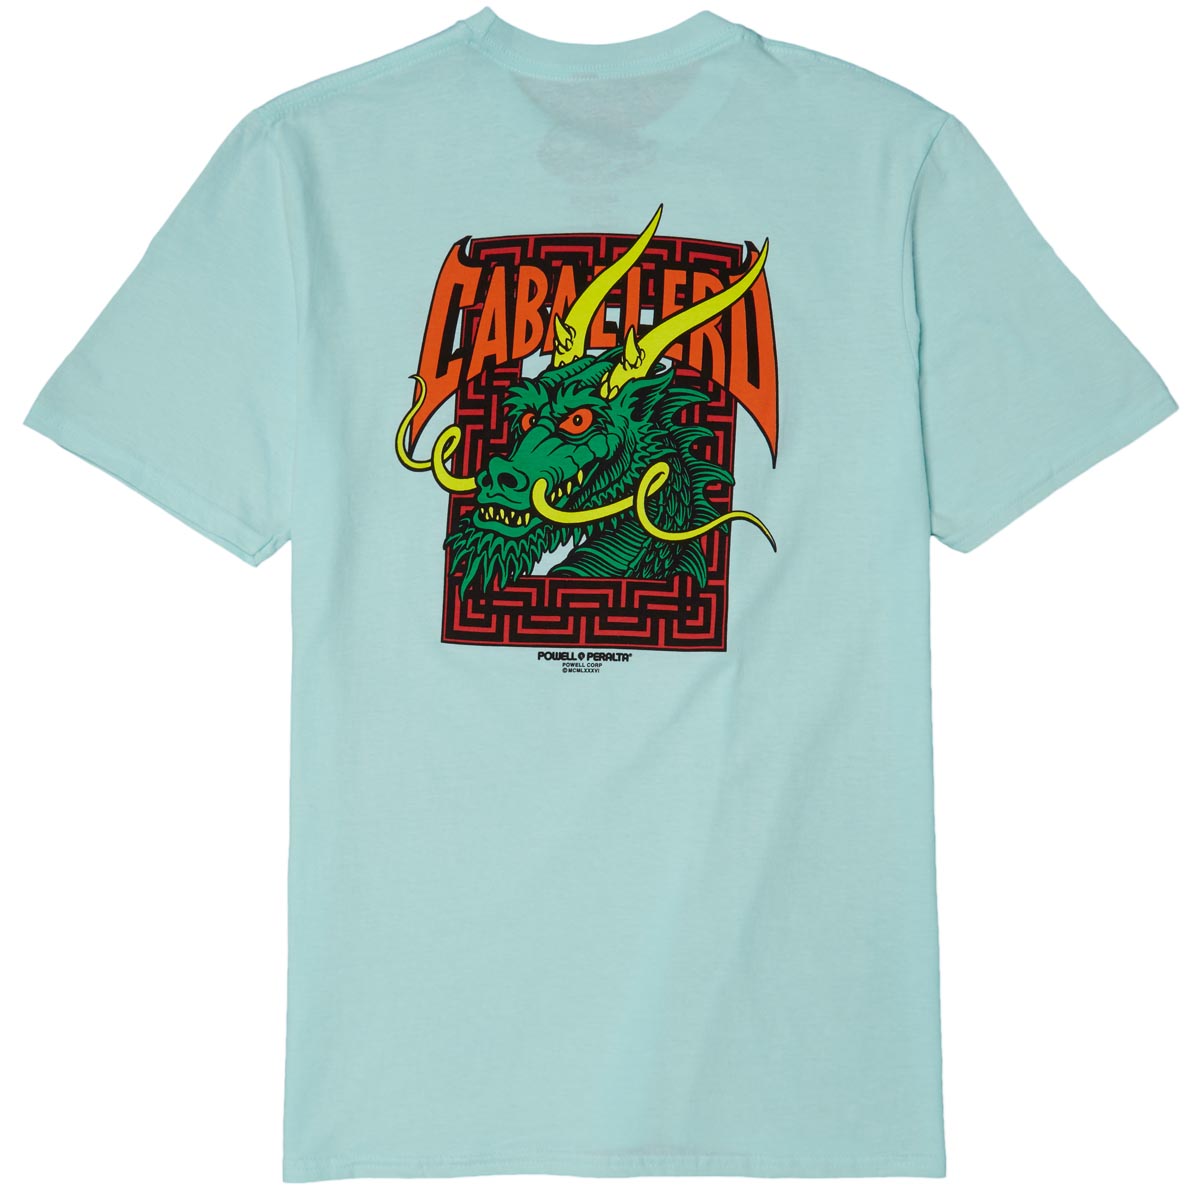 Powell-Peralta Steve Caballero Street Dragon T-Shirt - Teal Ice image 1